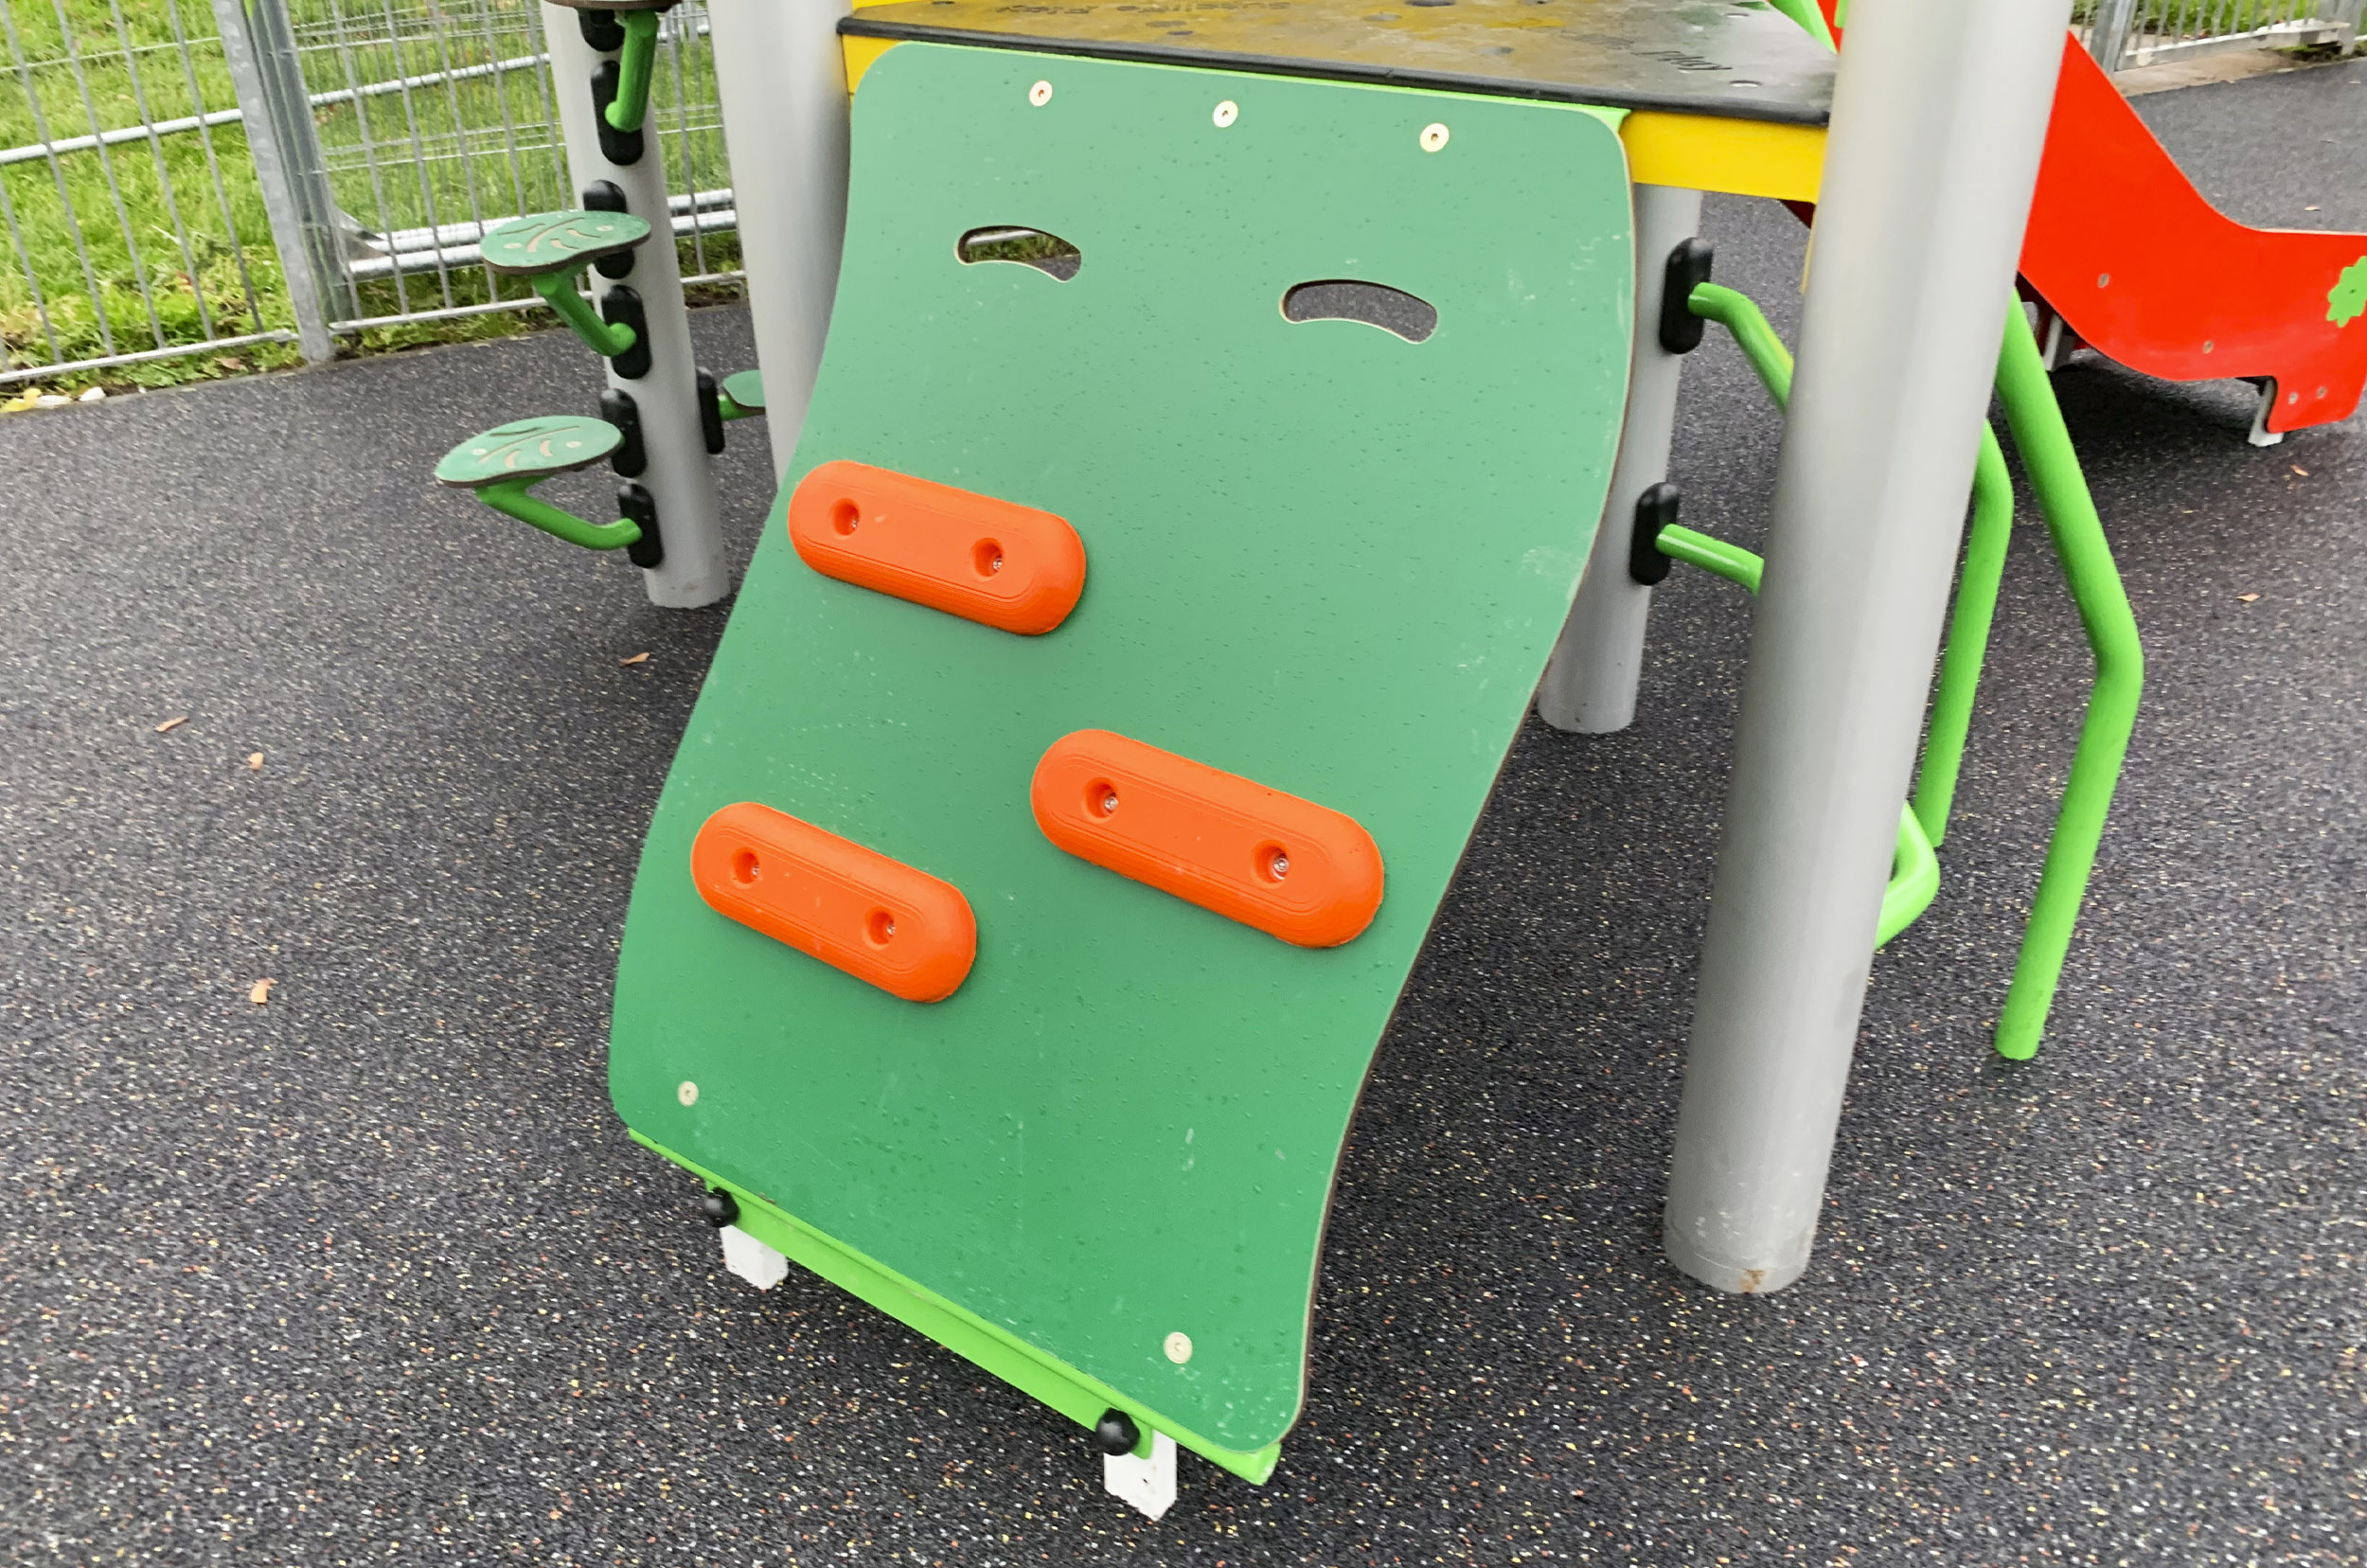 Spider Multiplay, green and orange ramp to access platform